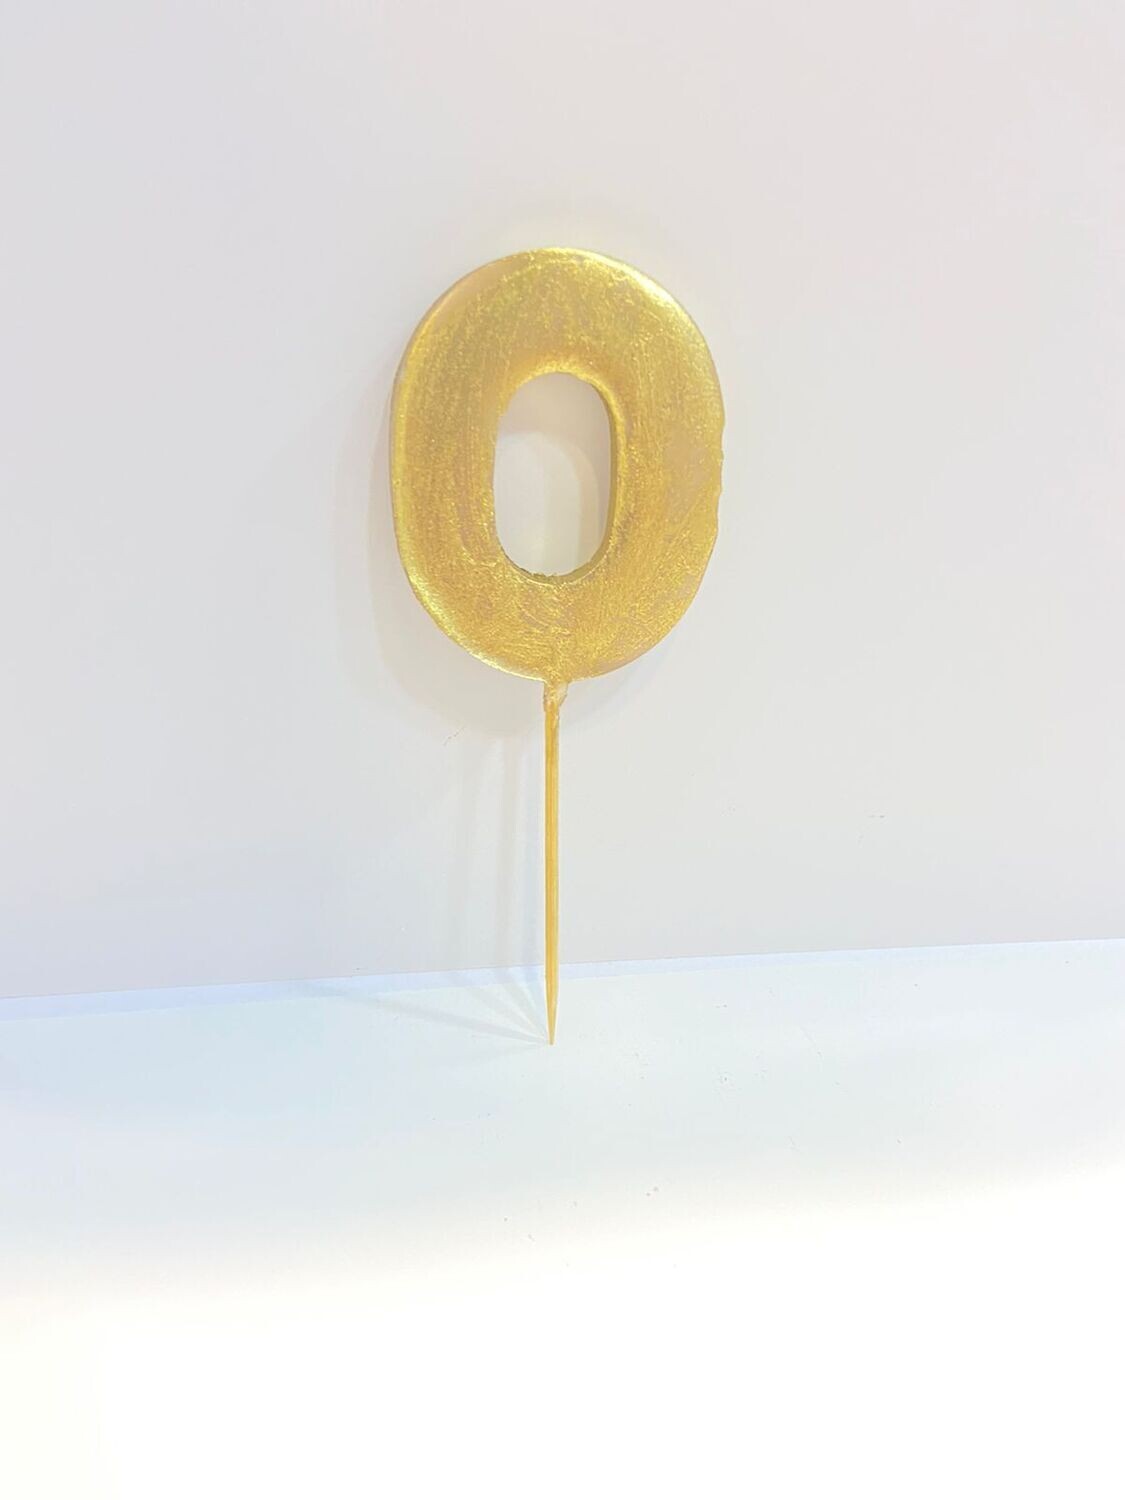 Цифра "0" АНТИЧНАЯ (золотая) на шпажке, из шоколадной глазури